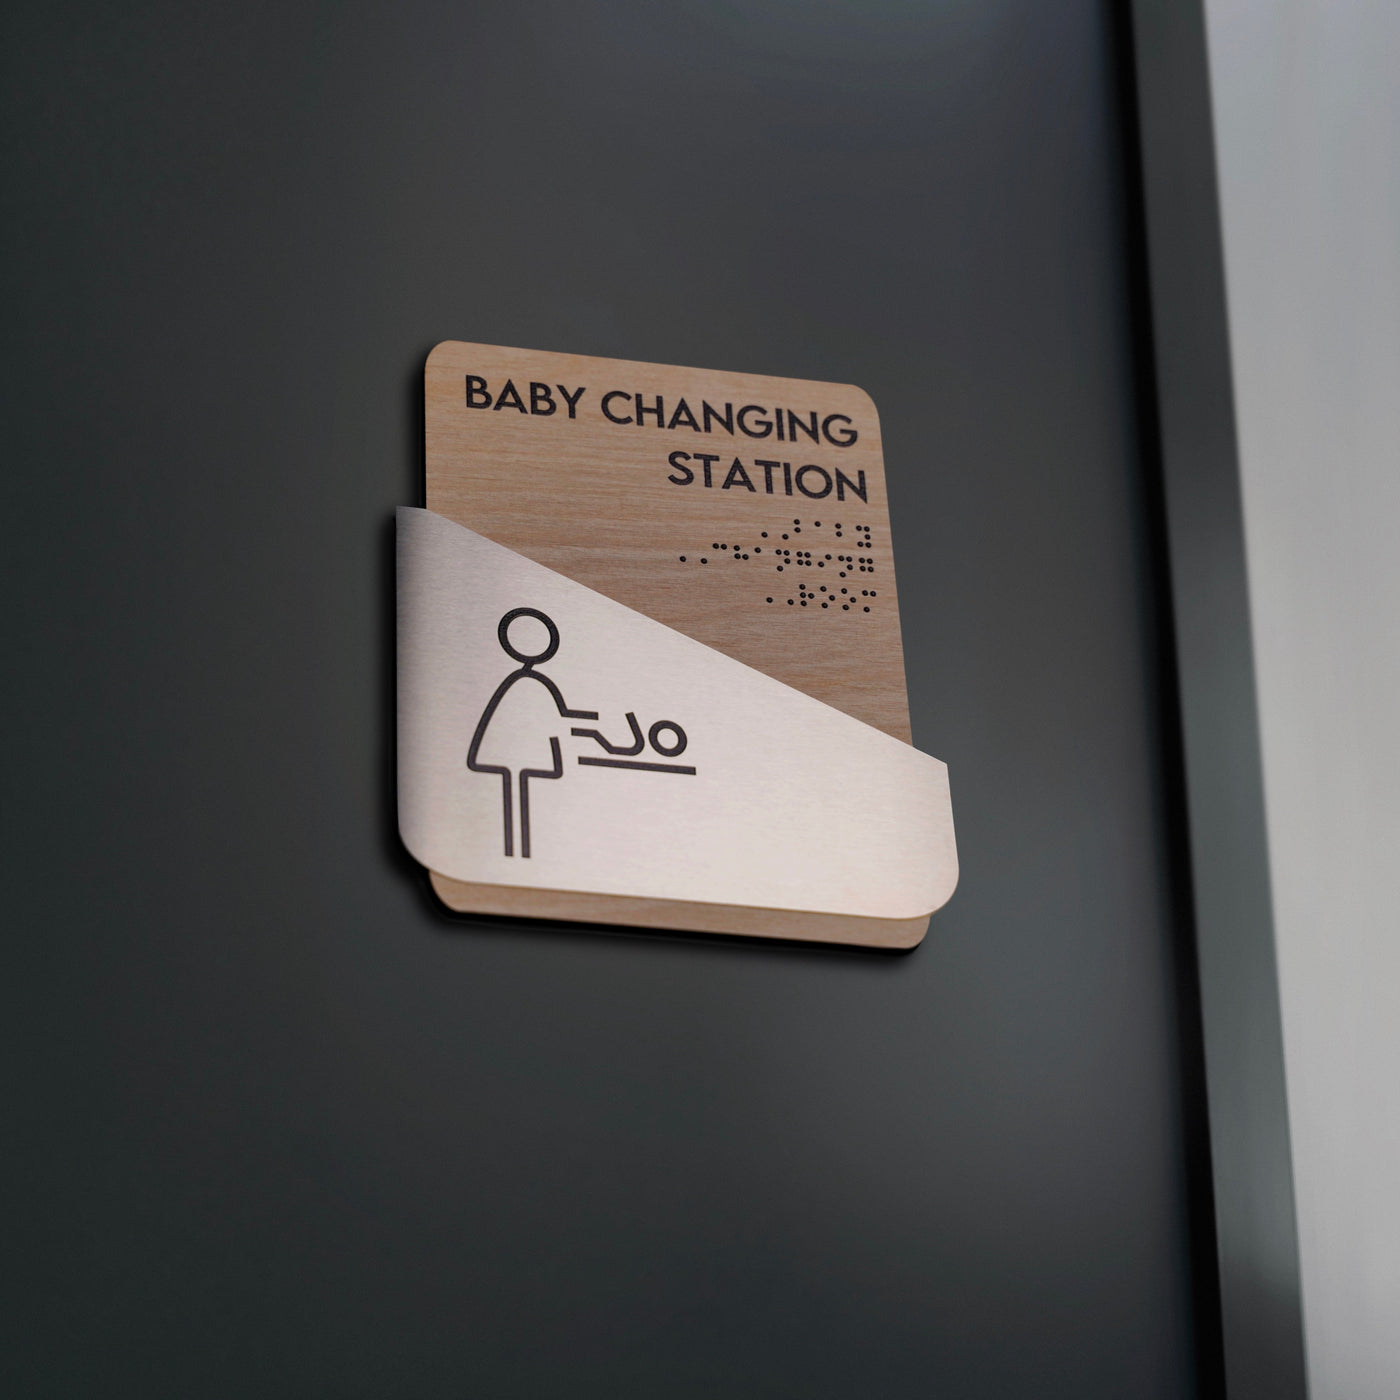 Bathroom Signs - Steel Toilet Signs For Bathroom "Downhill" Design